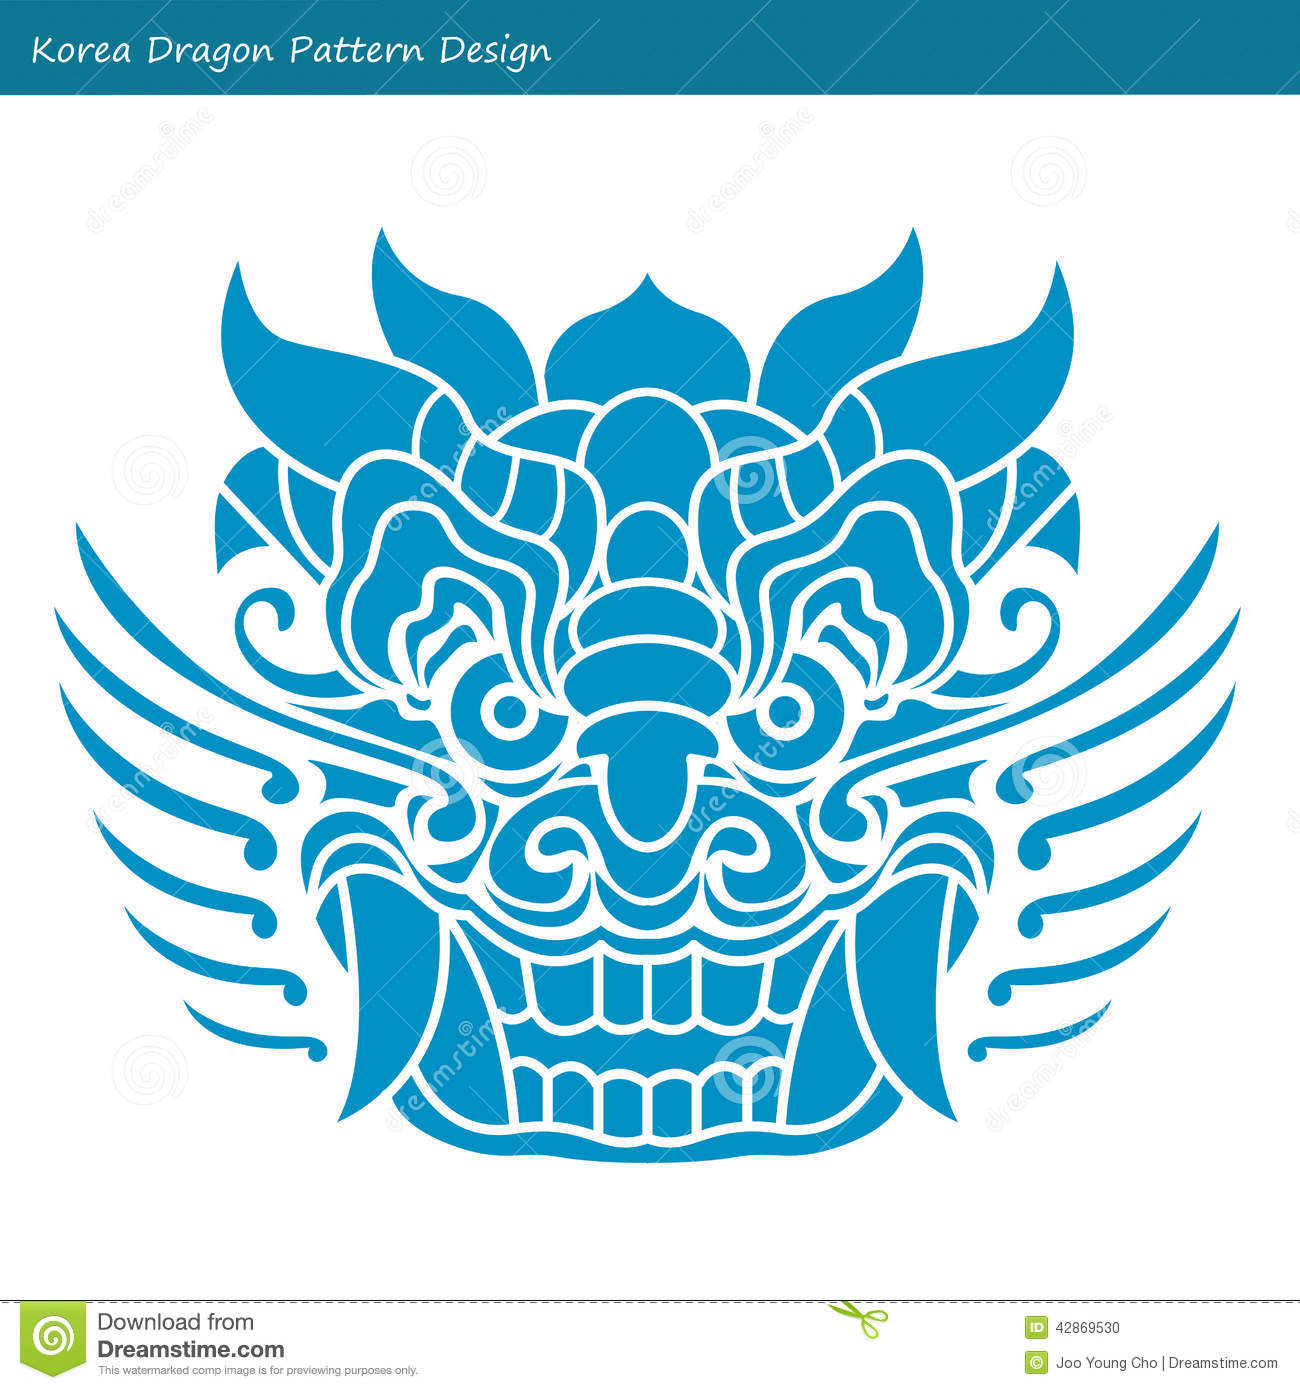 Korea Dragon Pattern Design  Korean Traditional Pattern Design S Stock